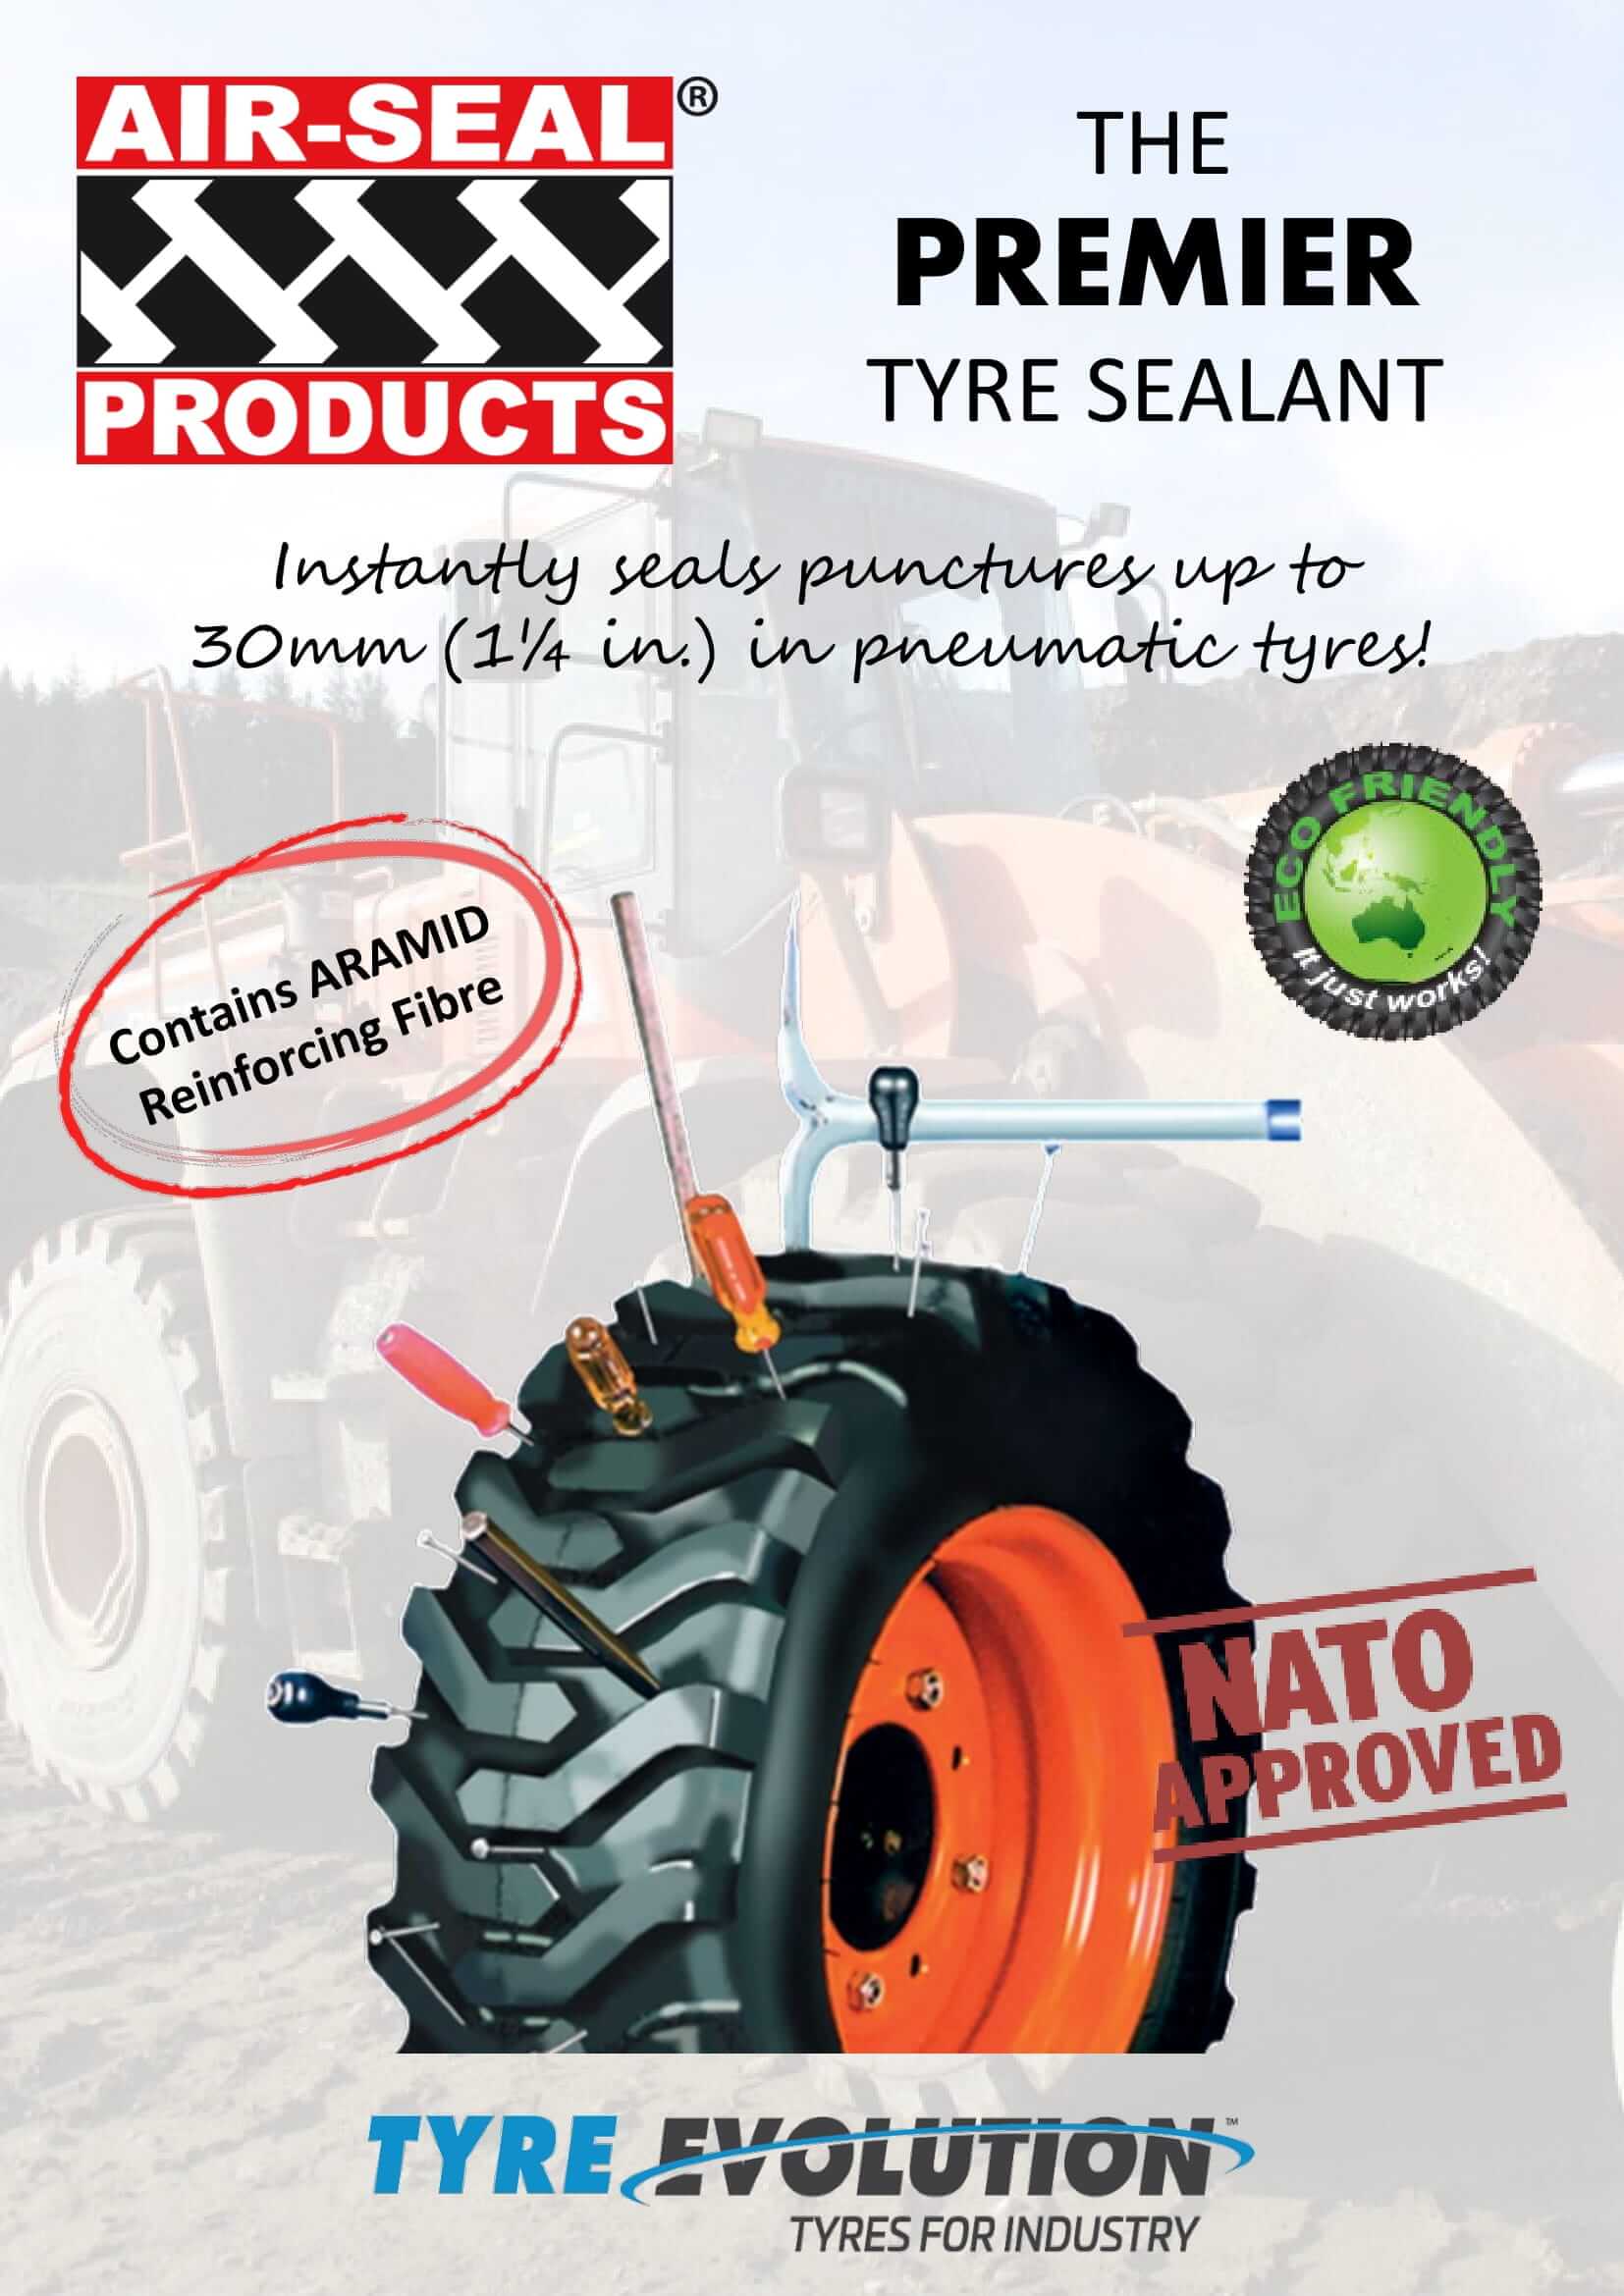 The premier tyre sealant